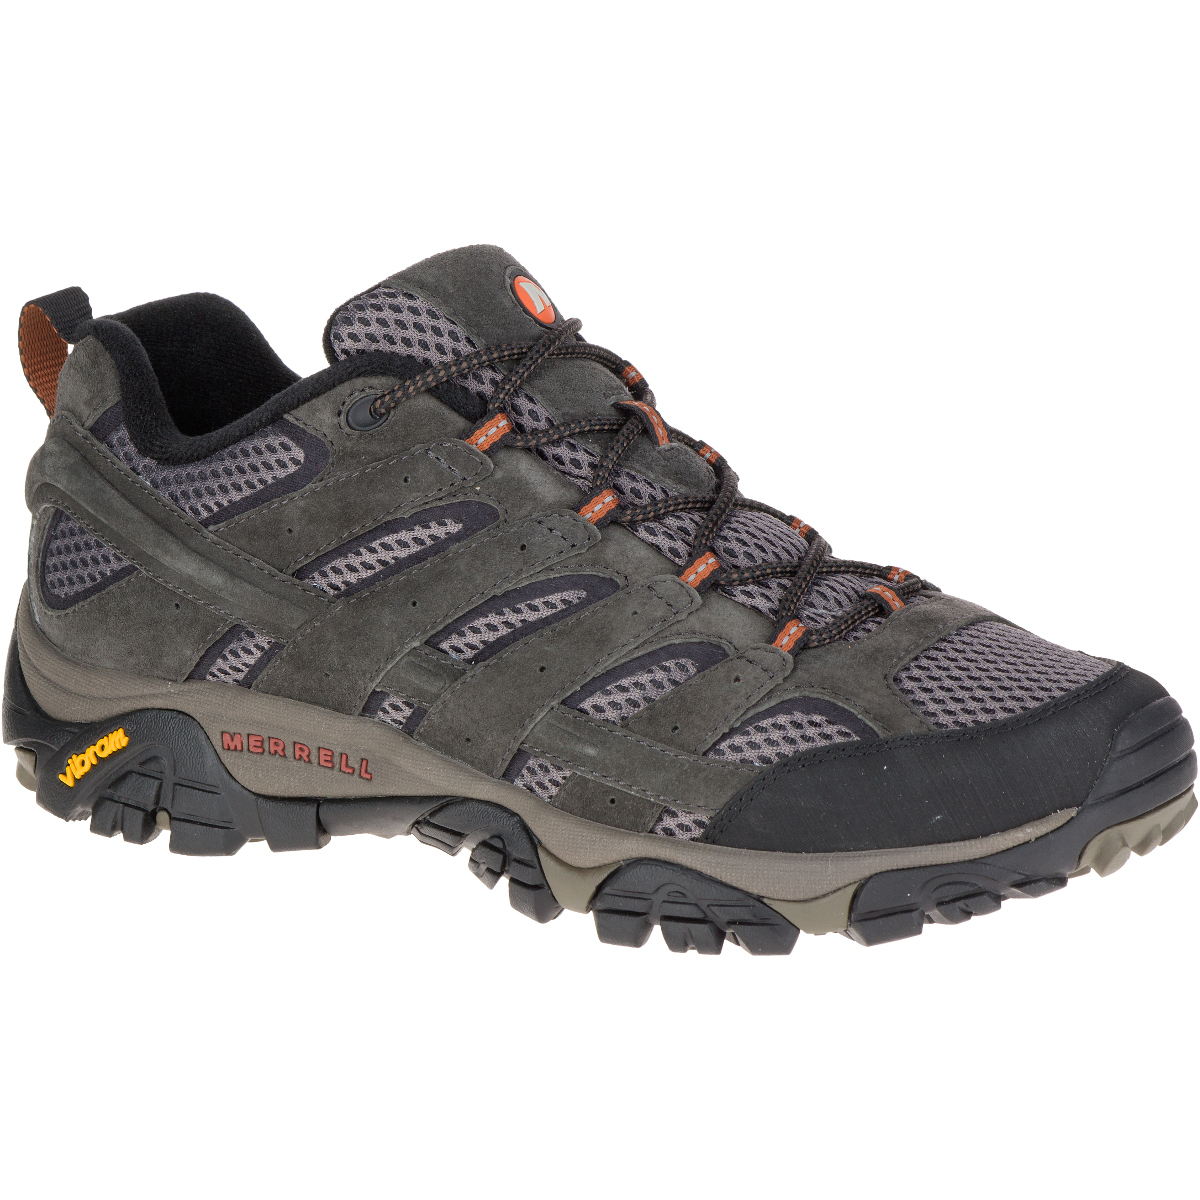 Merrell Men's Moab 2 Ventilator Hiking Shoes, Wide